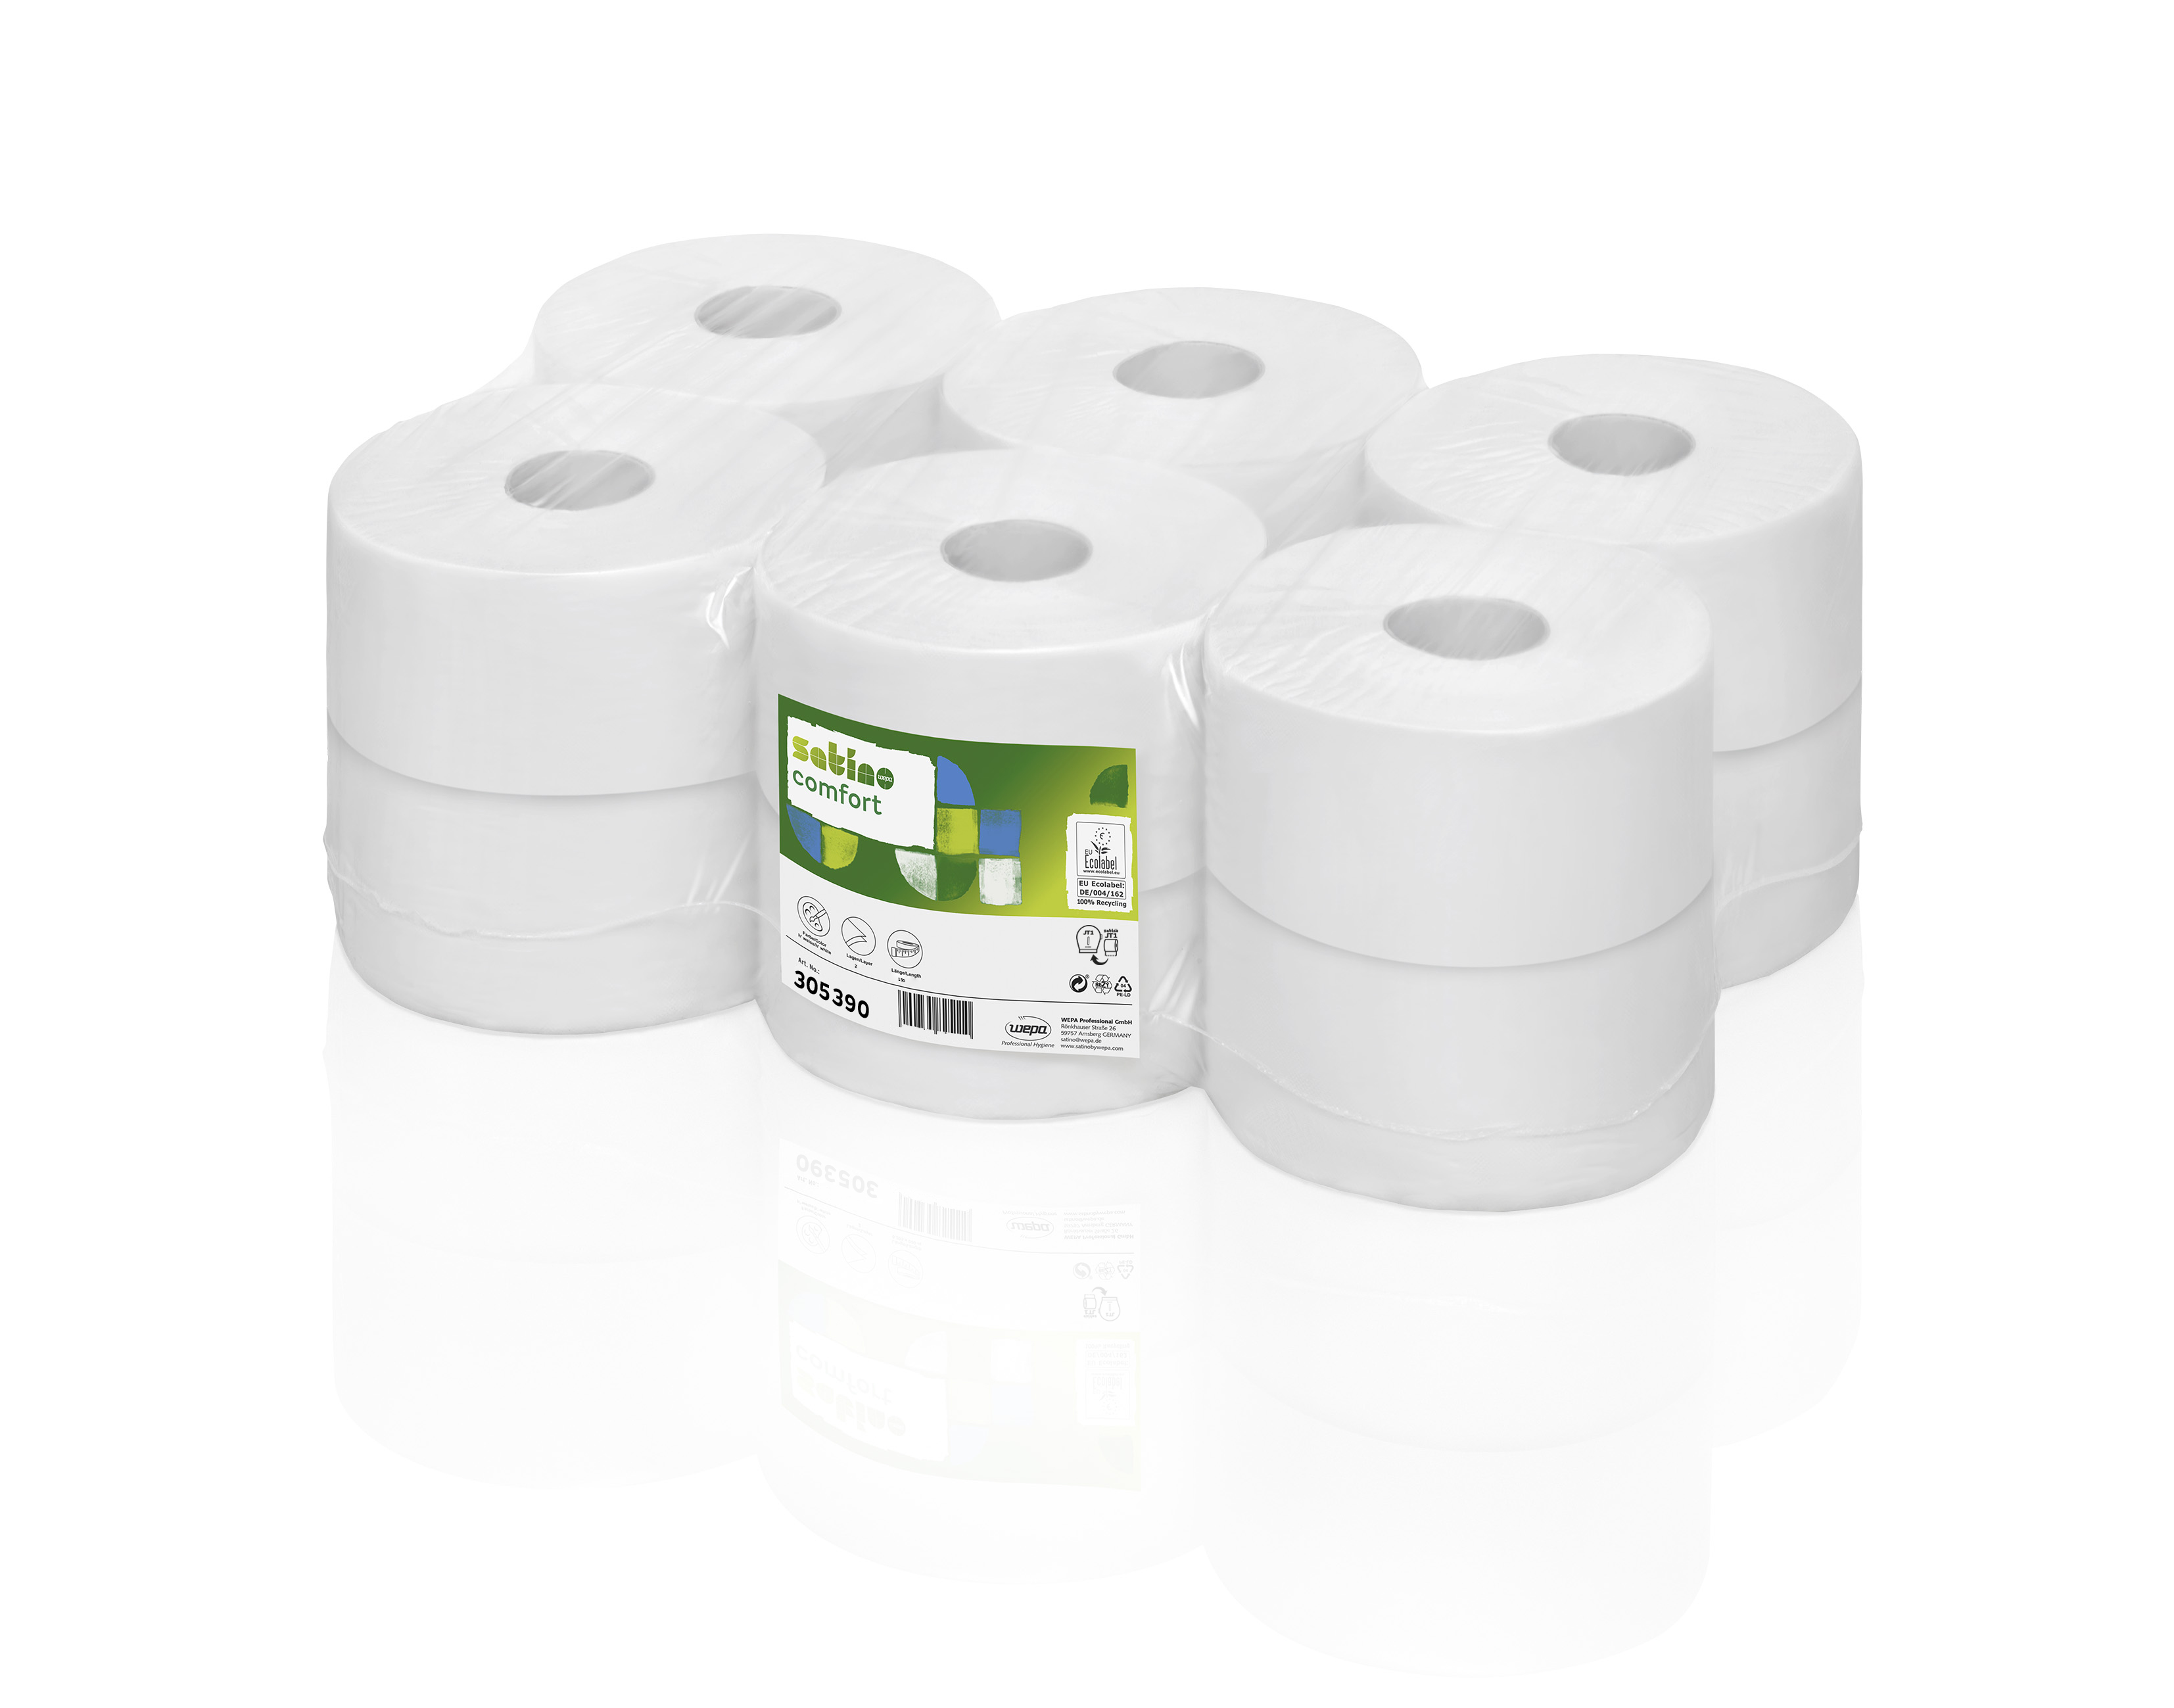 Satino comfort Toilettenpapier Mini Jumbo-Rolle, 2-lagig, Recycling, hochweiß